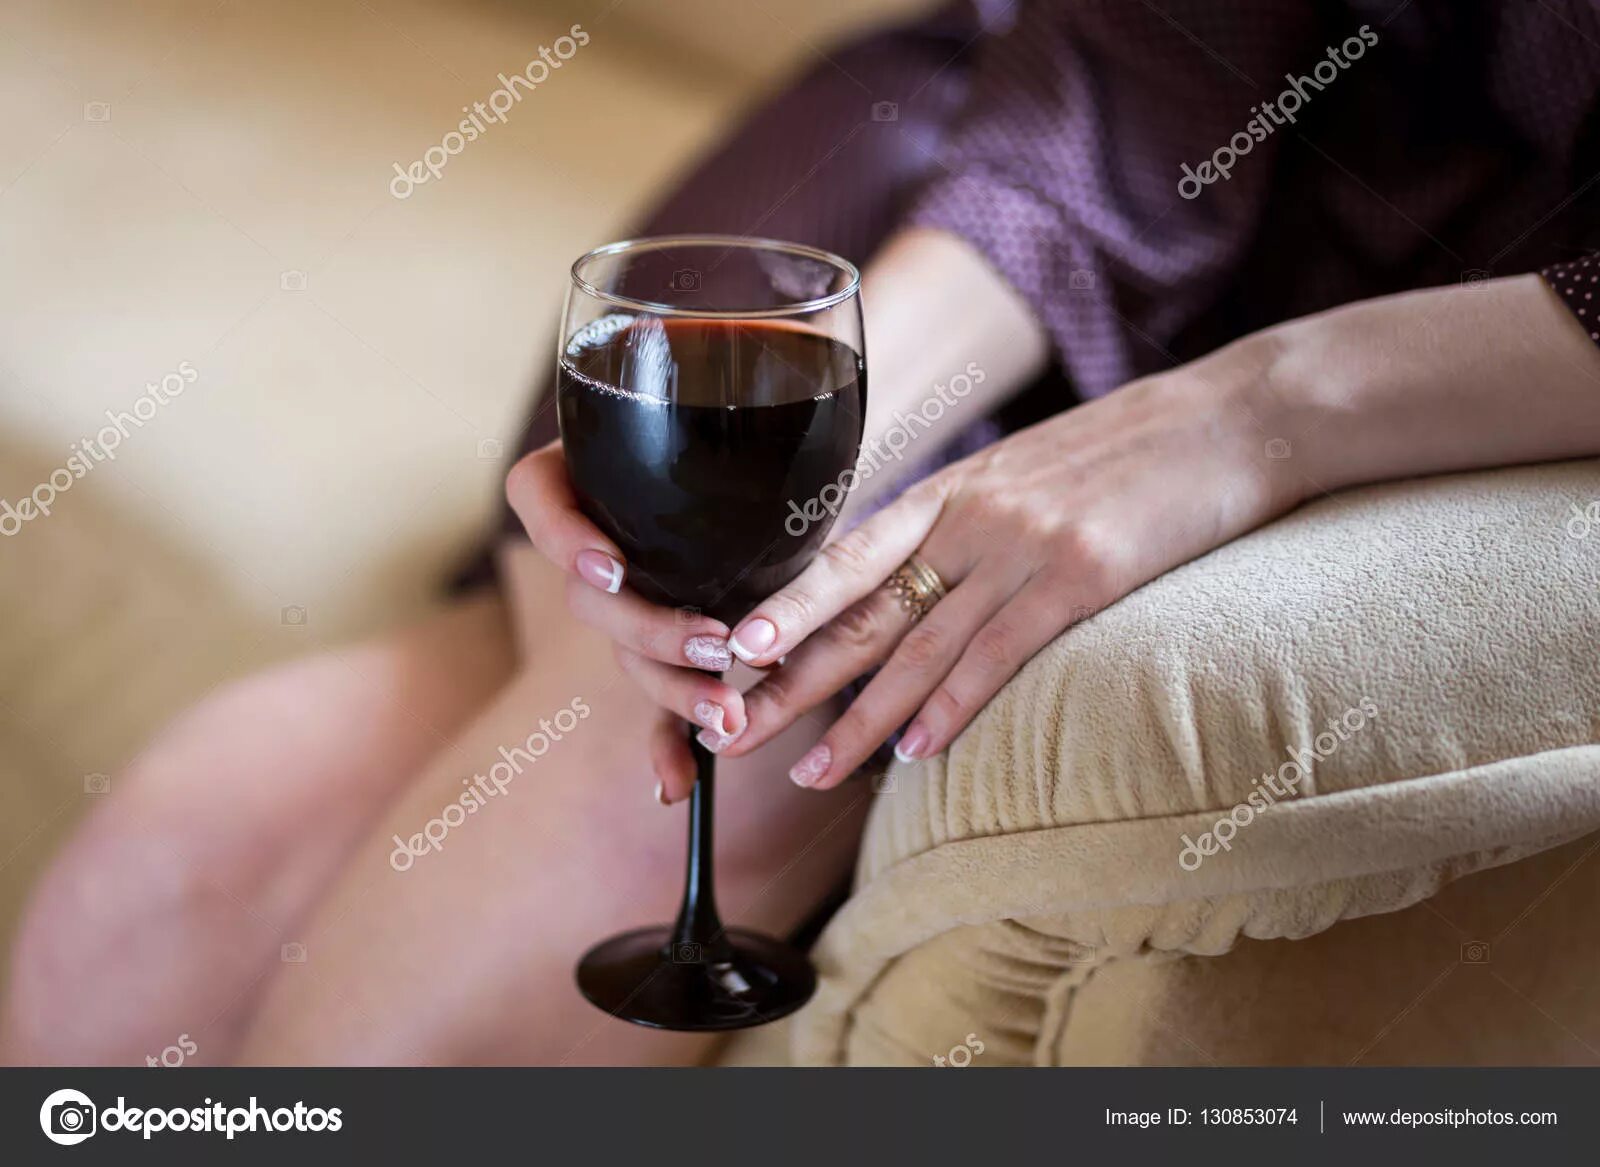 Женщина с бокалом. Женщина с бокалом в руке. Бокал вина в руке девушки. Рука с бокалом. Вина перед мужем